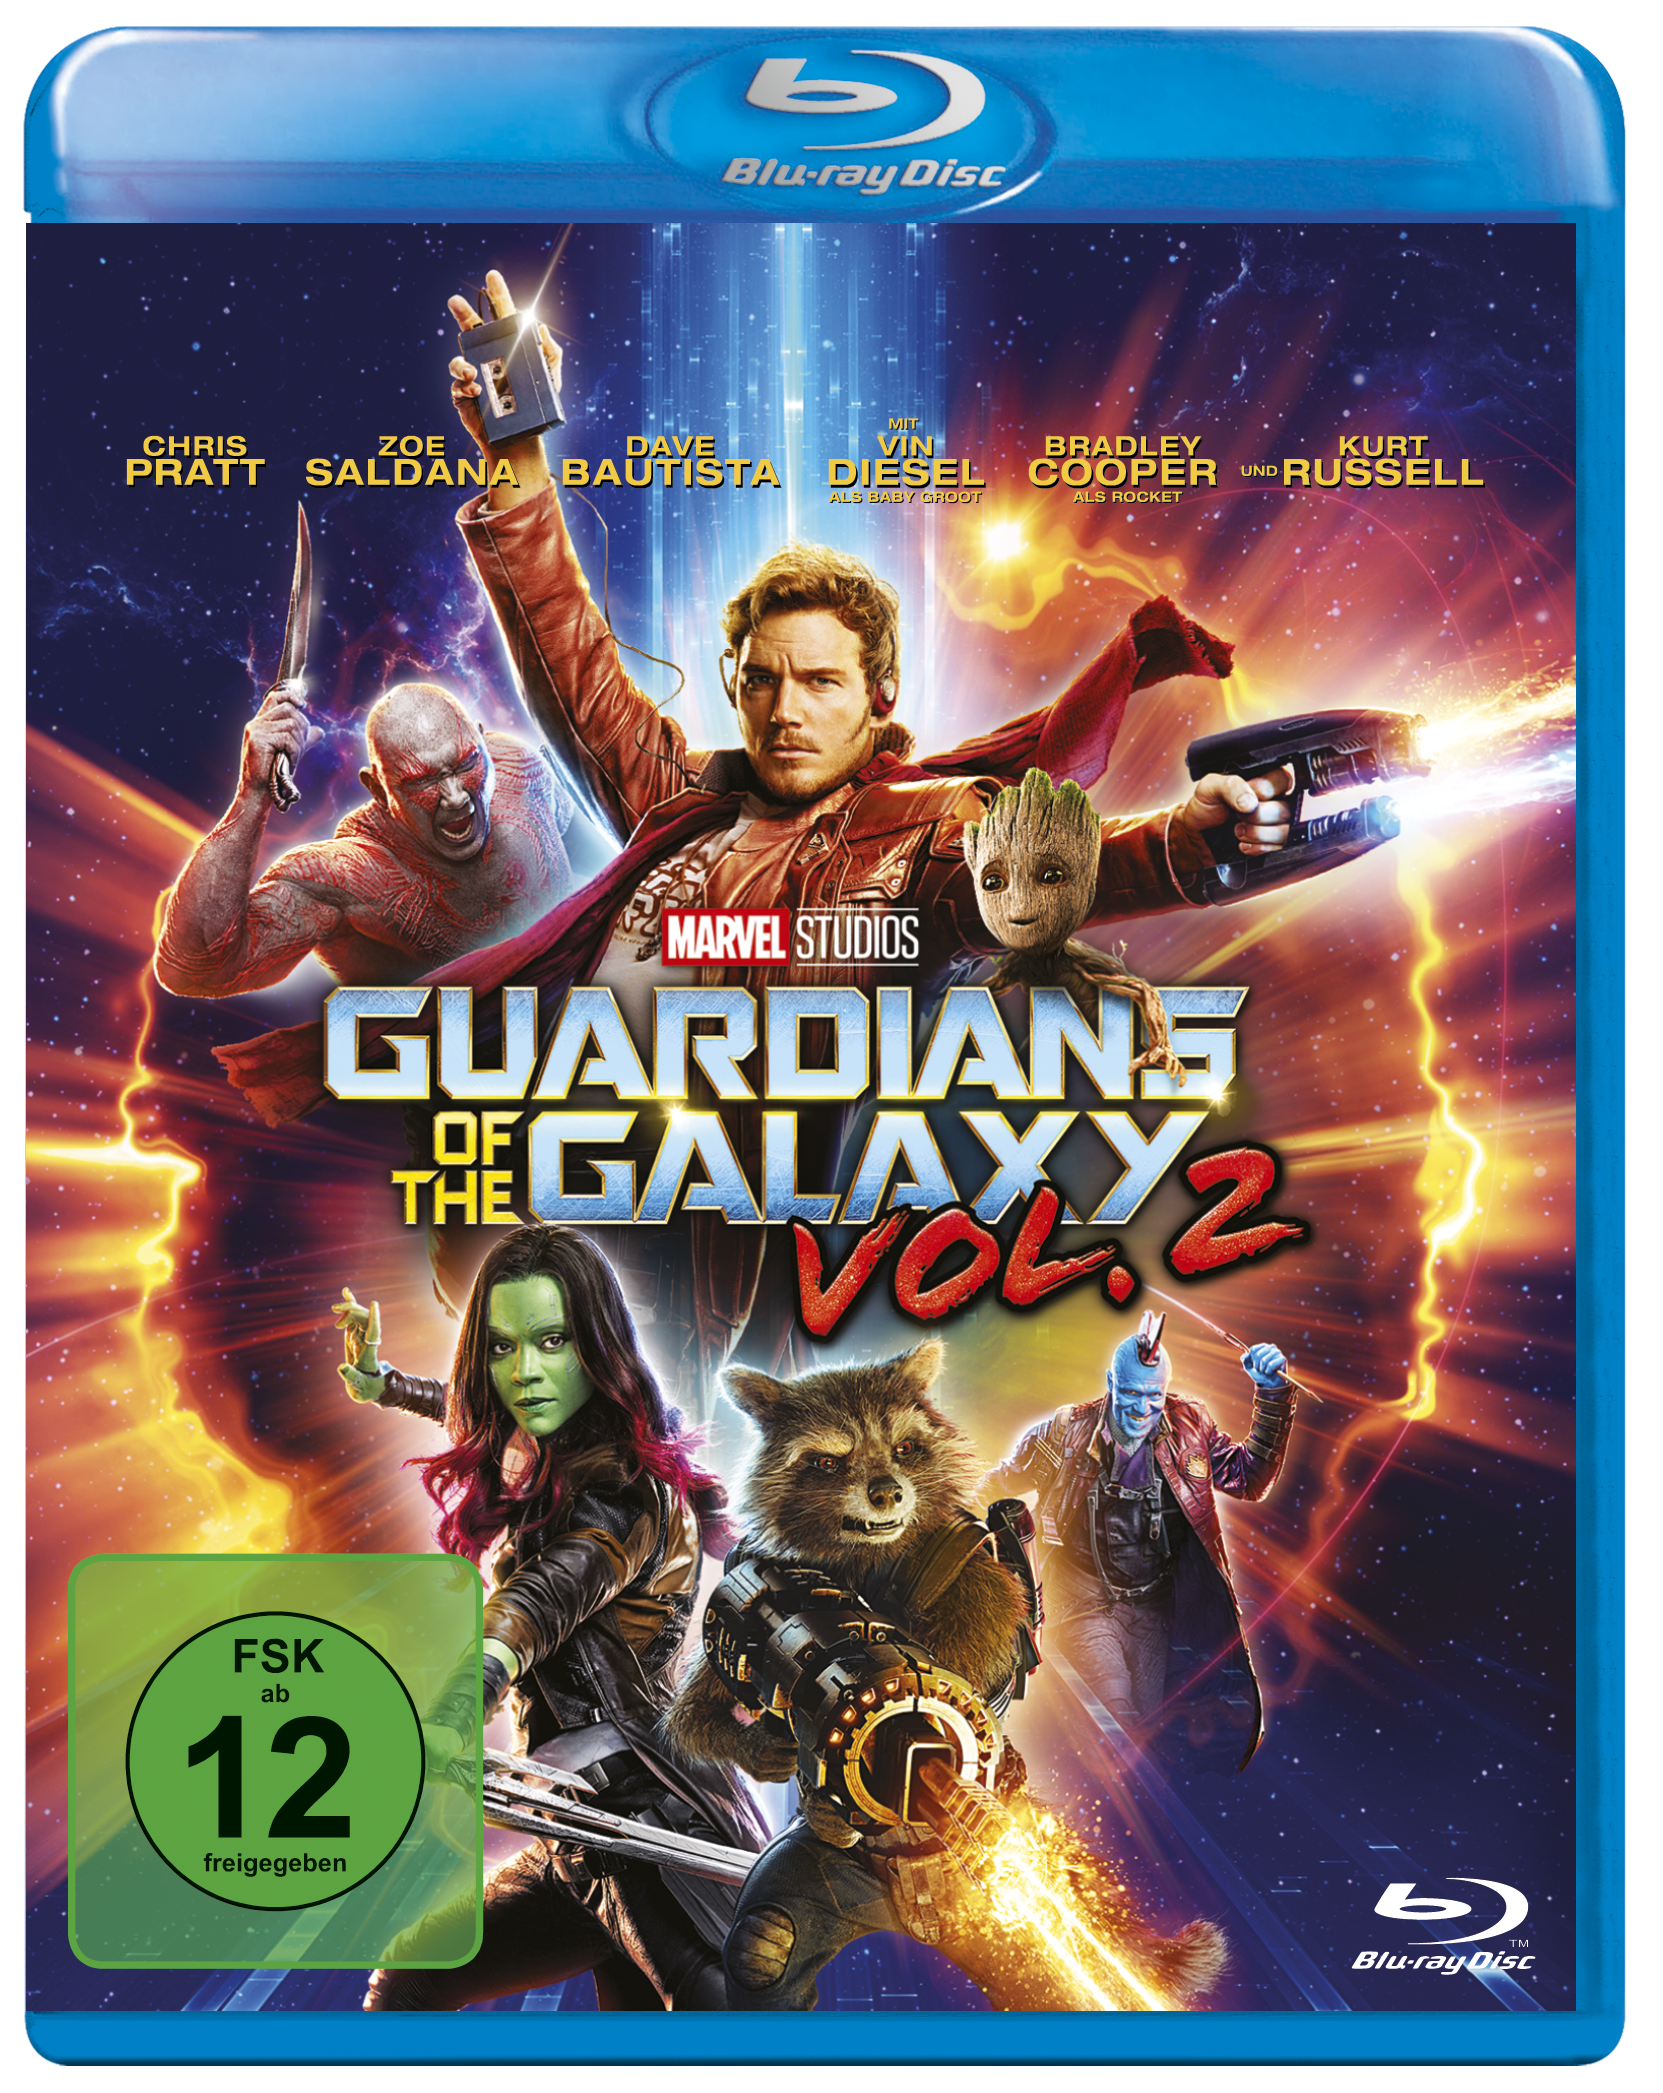 Vol. Blu-ray of 2 Guardians Galaxy the